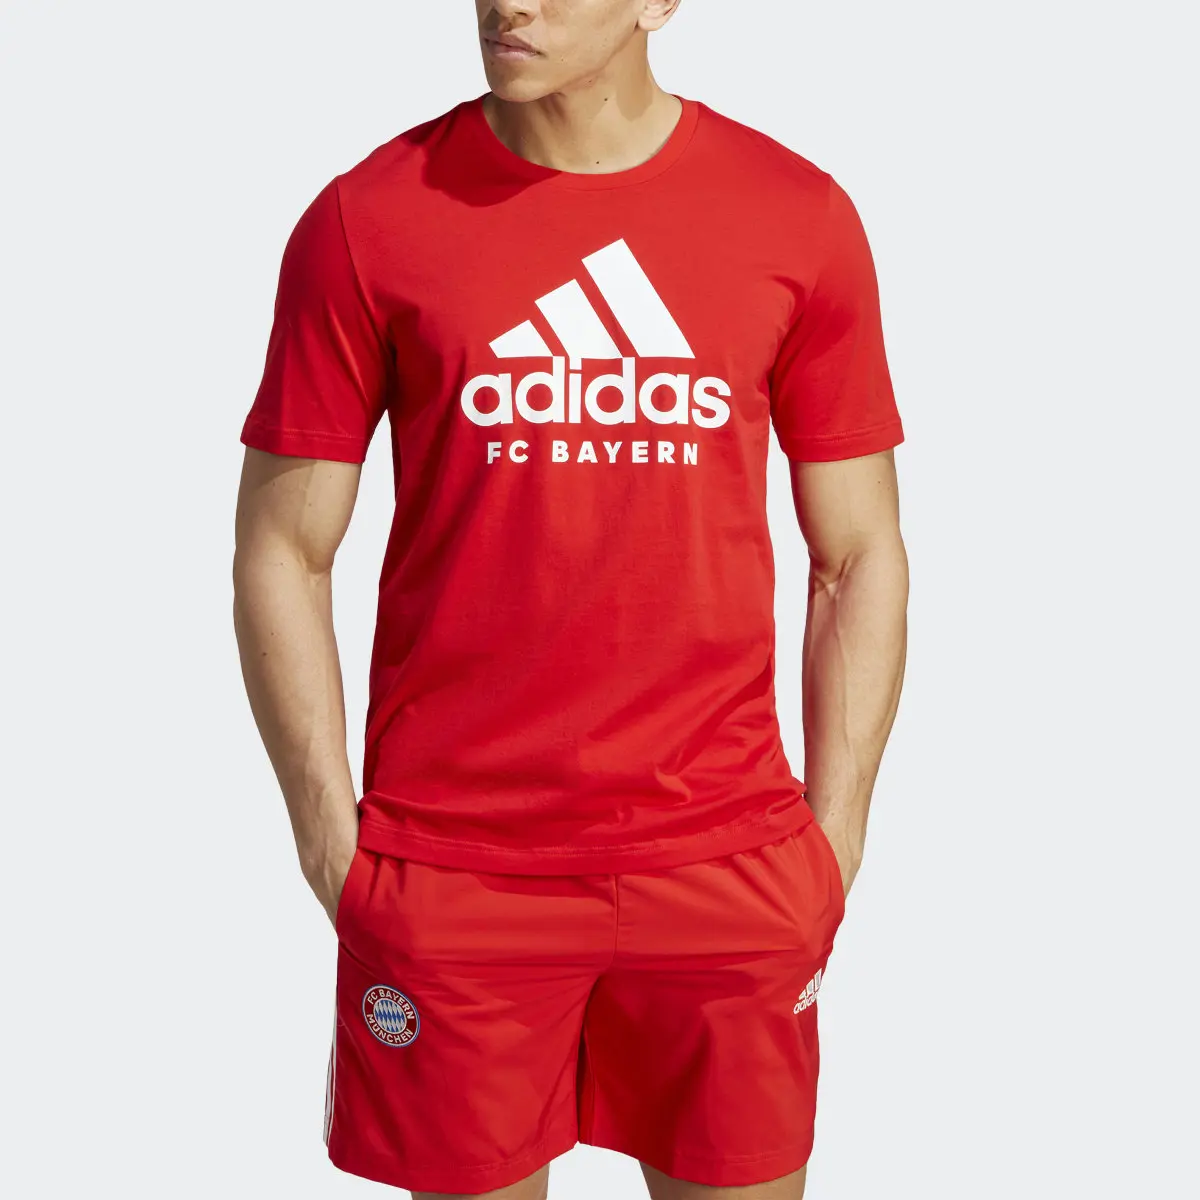 Adidas T-shirt FC Bayern DNA Graphic. 1